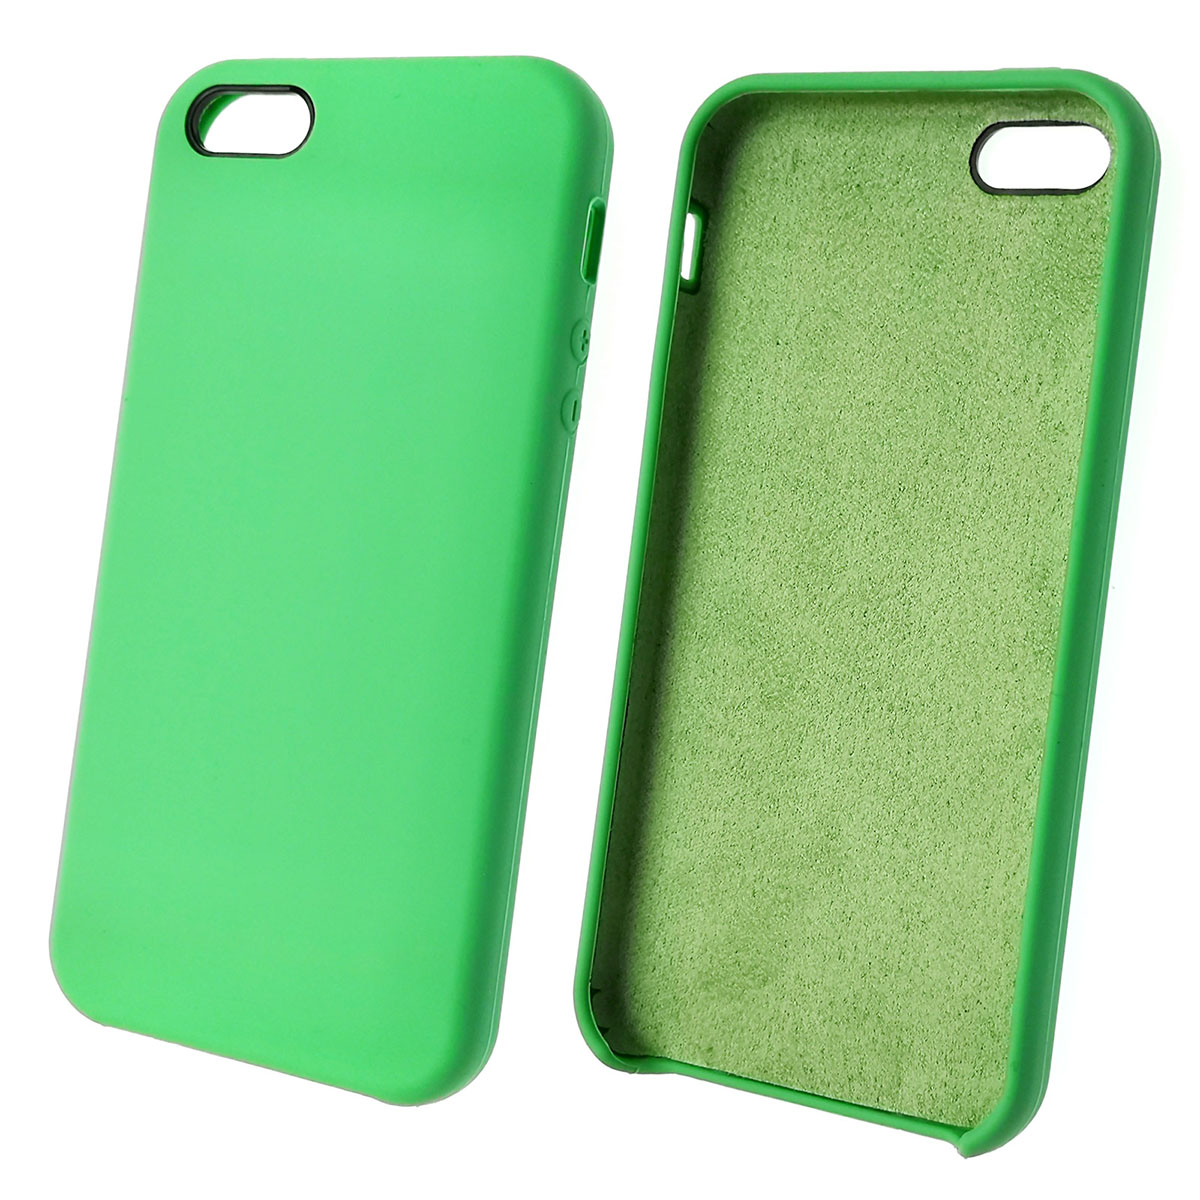 Чехол накладка Silicon Case для APPLE iPhone 5, 5S, SE, силикон, бархат, цвет мятный.